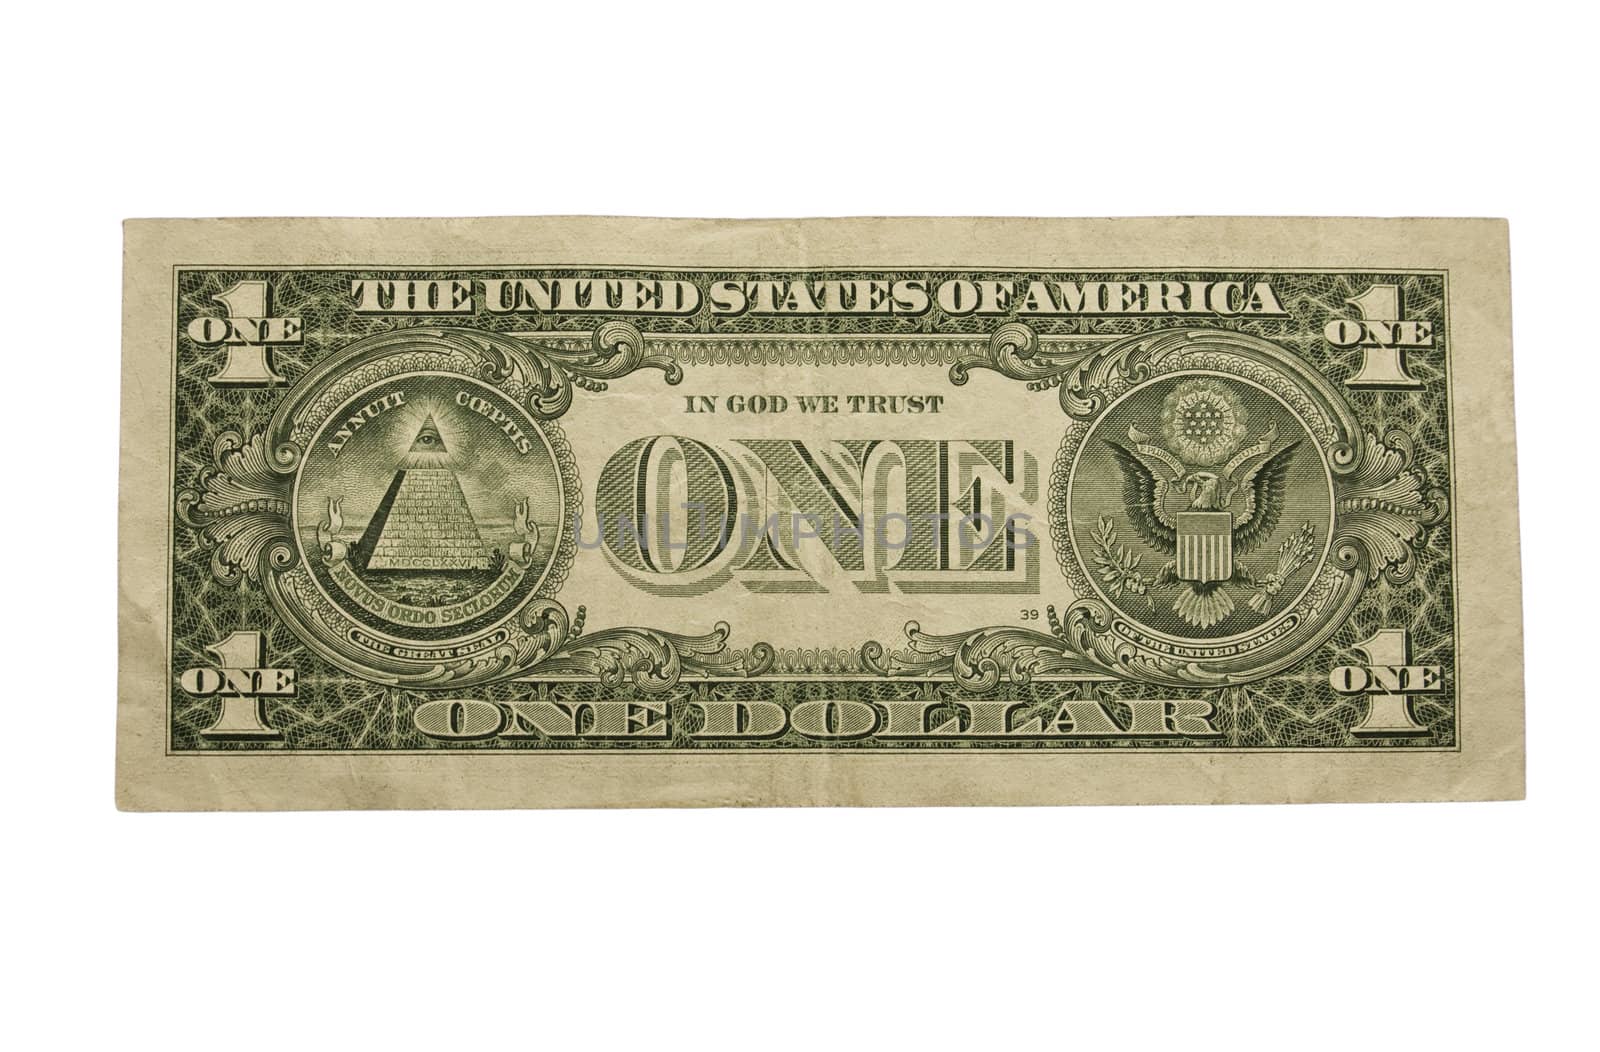 Bent one dollar bill by minoandriani